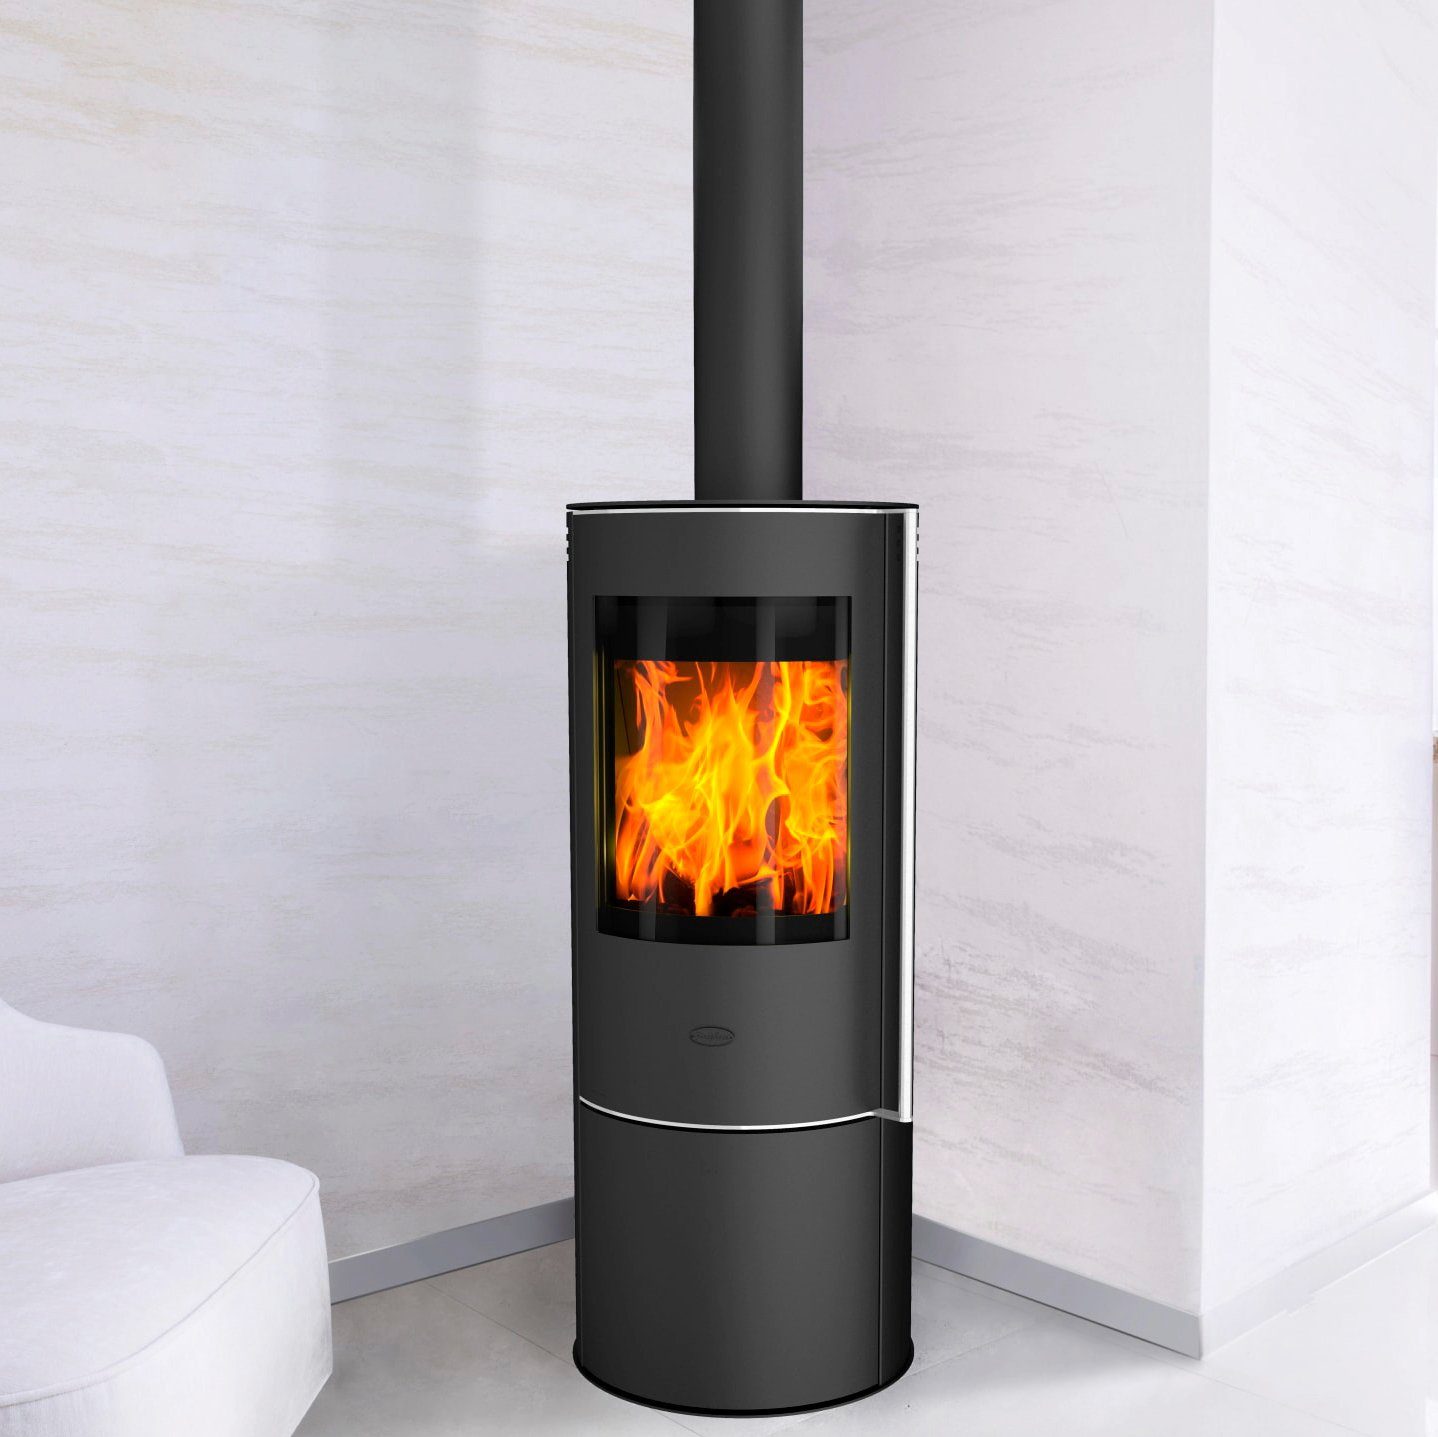 Fireplace Kaminofen Isola, 6 kW, Dauerbrand